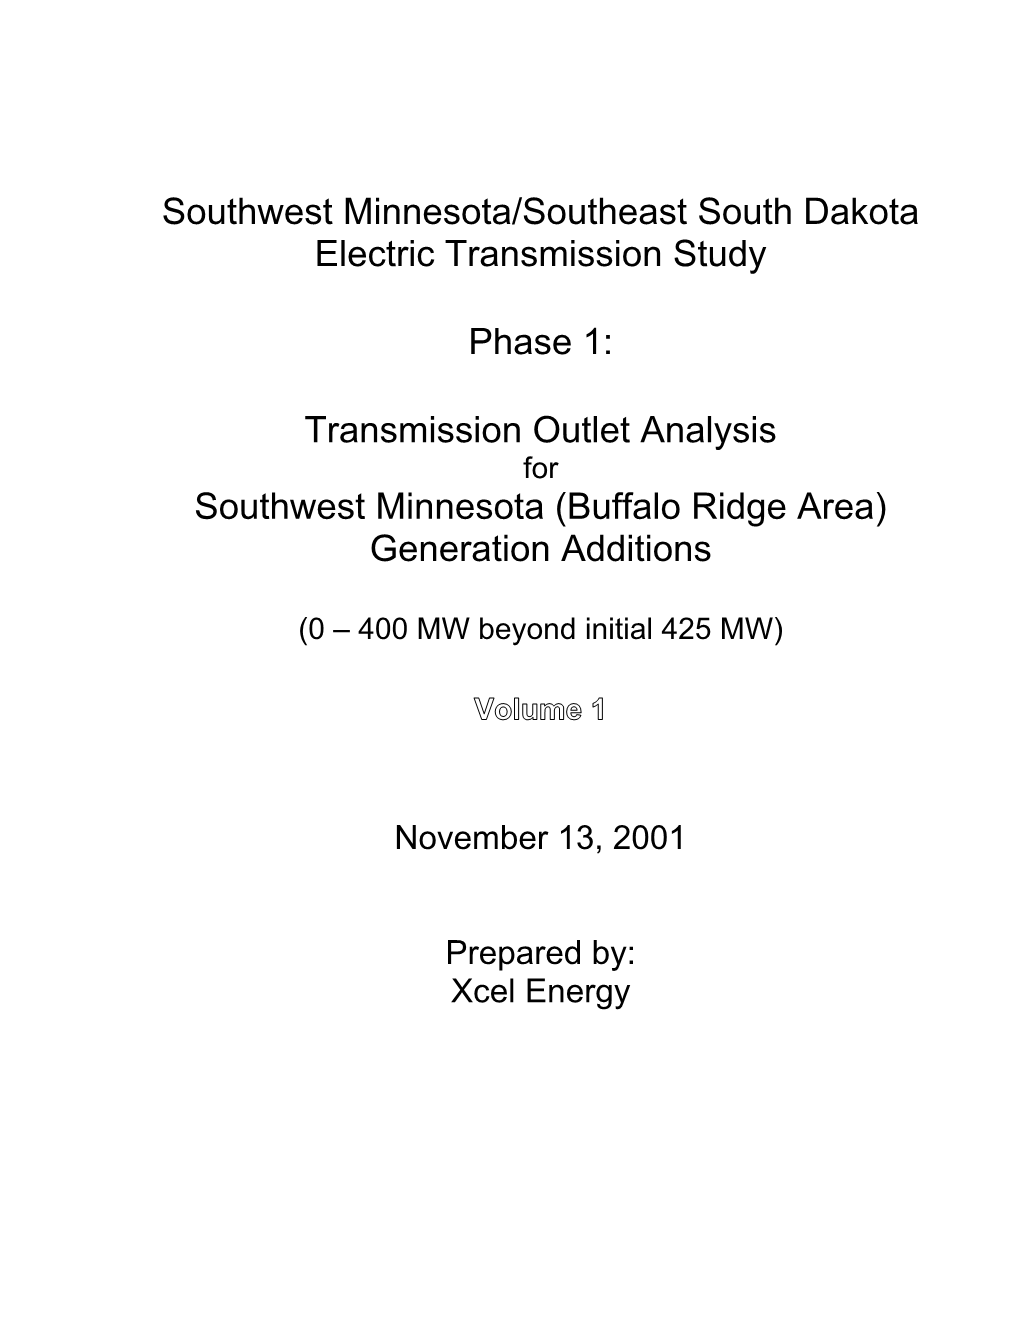 Southwest Minnesota/Southeast South Dakota Electric Transmission Study